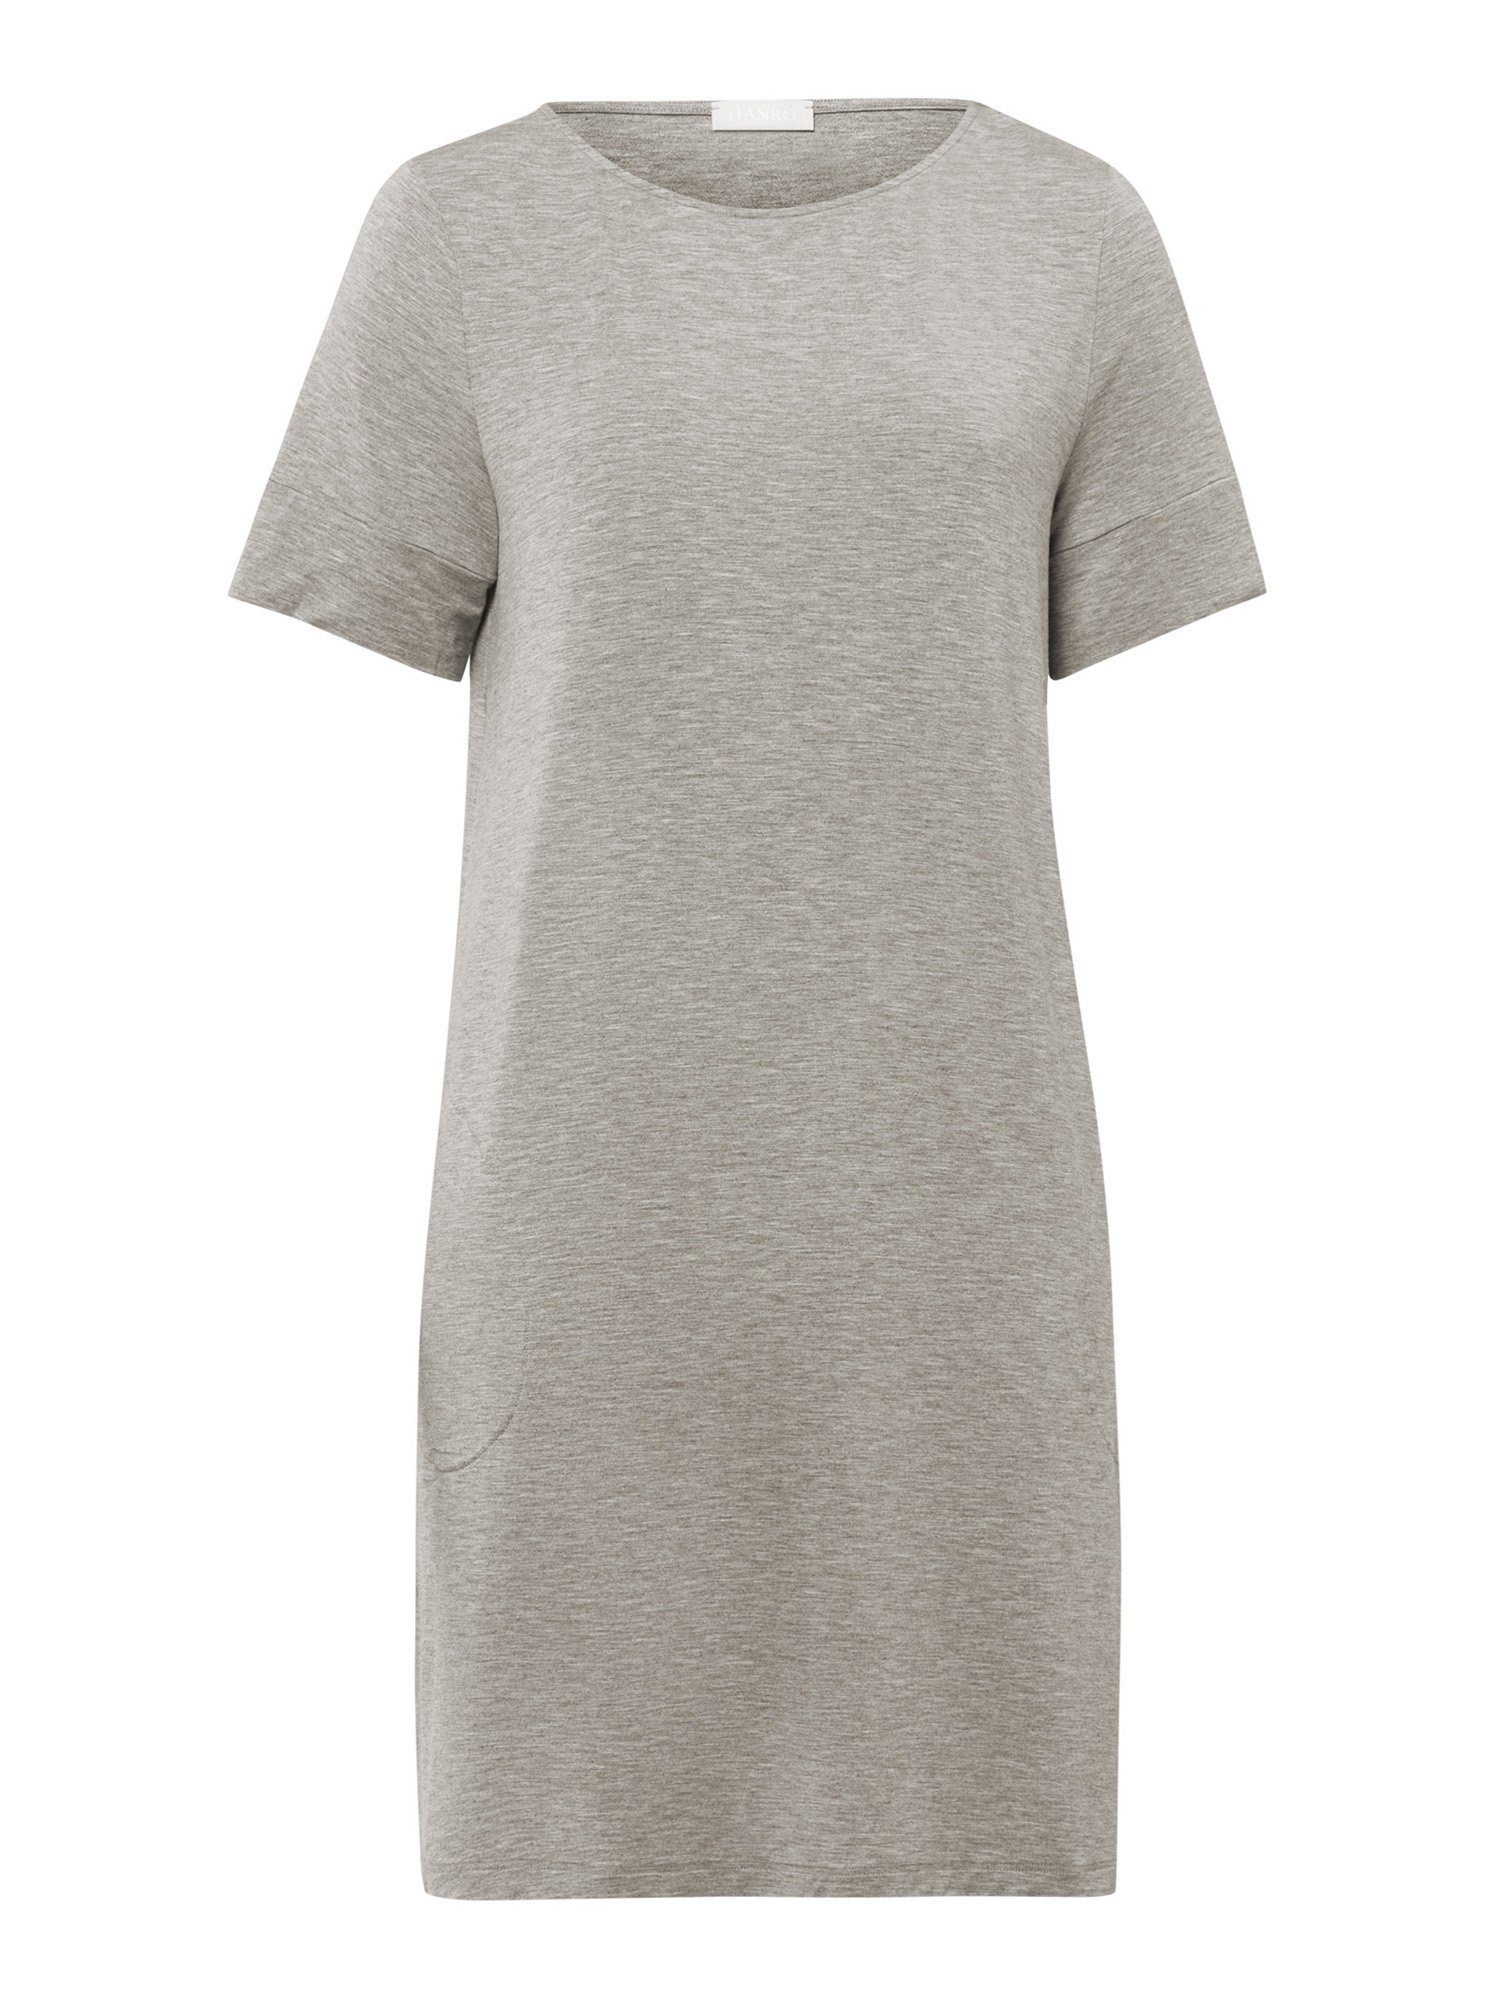 Hanro Nachthemd Natural Elegance Nacht-hemd schlafmode sleepwear grey melange